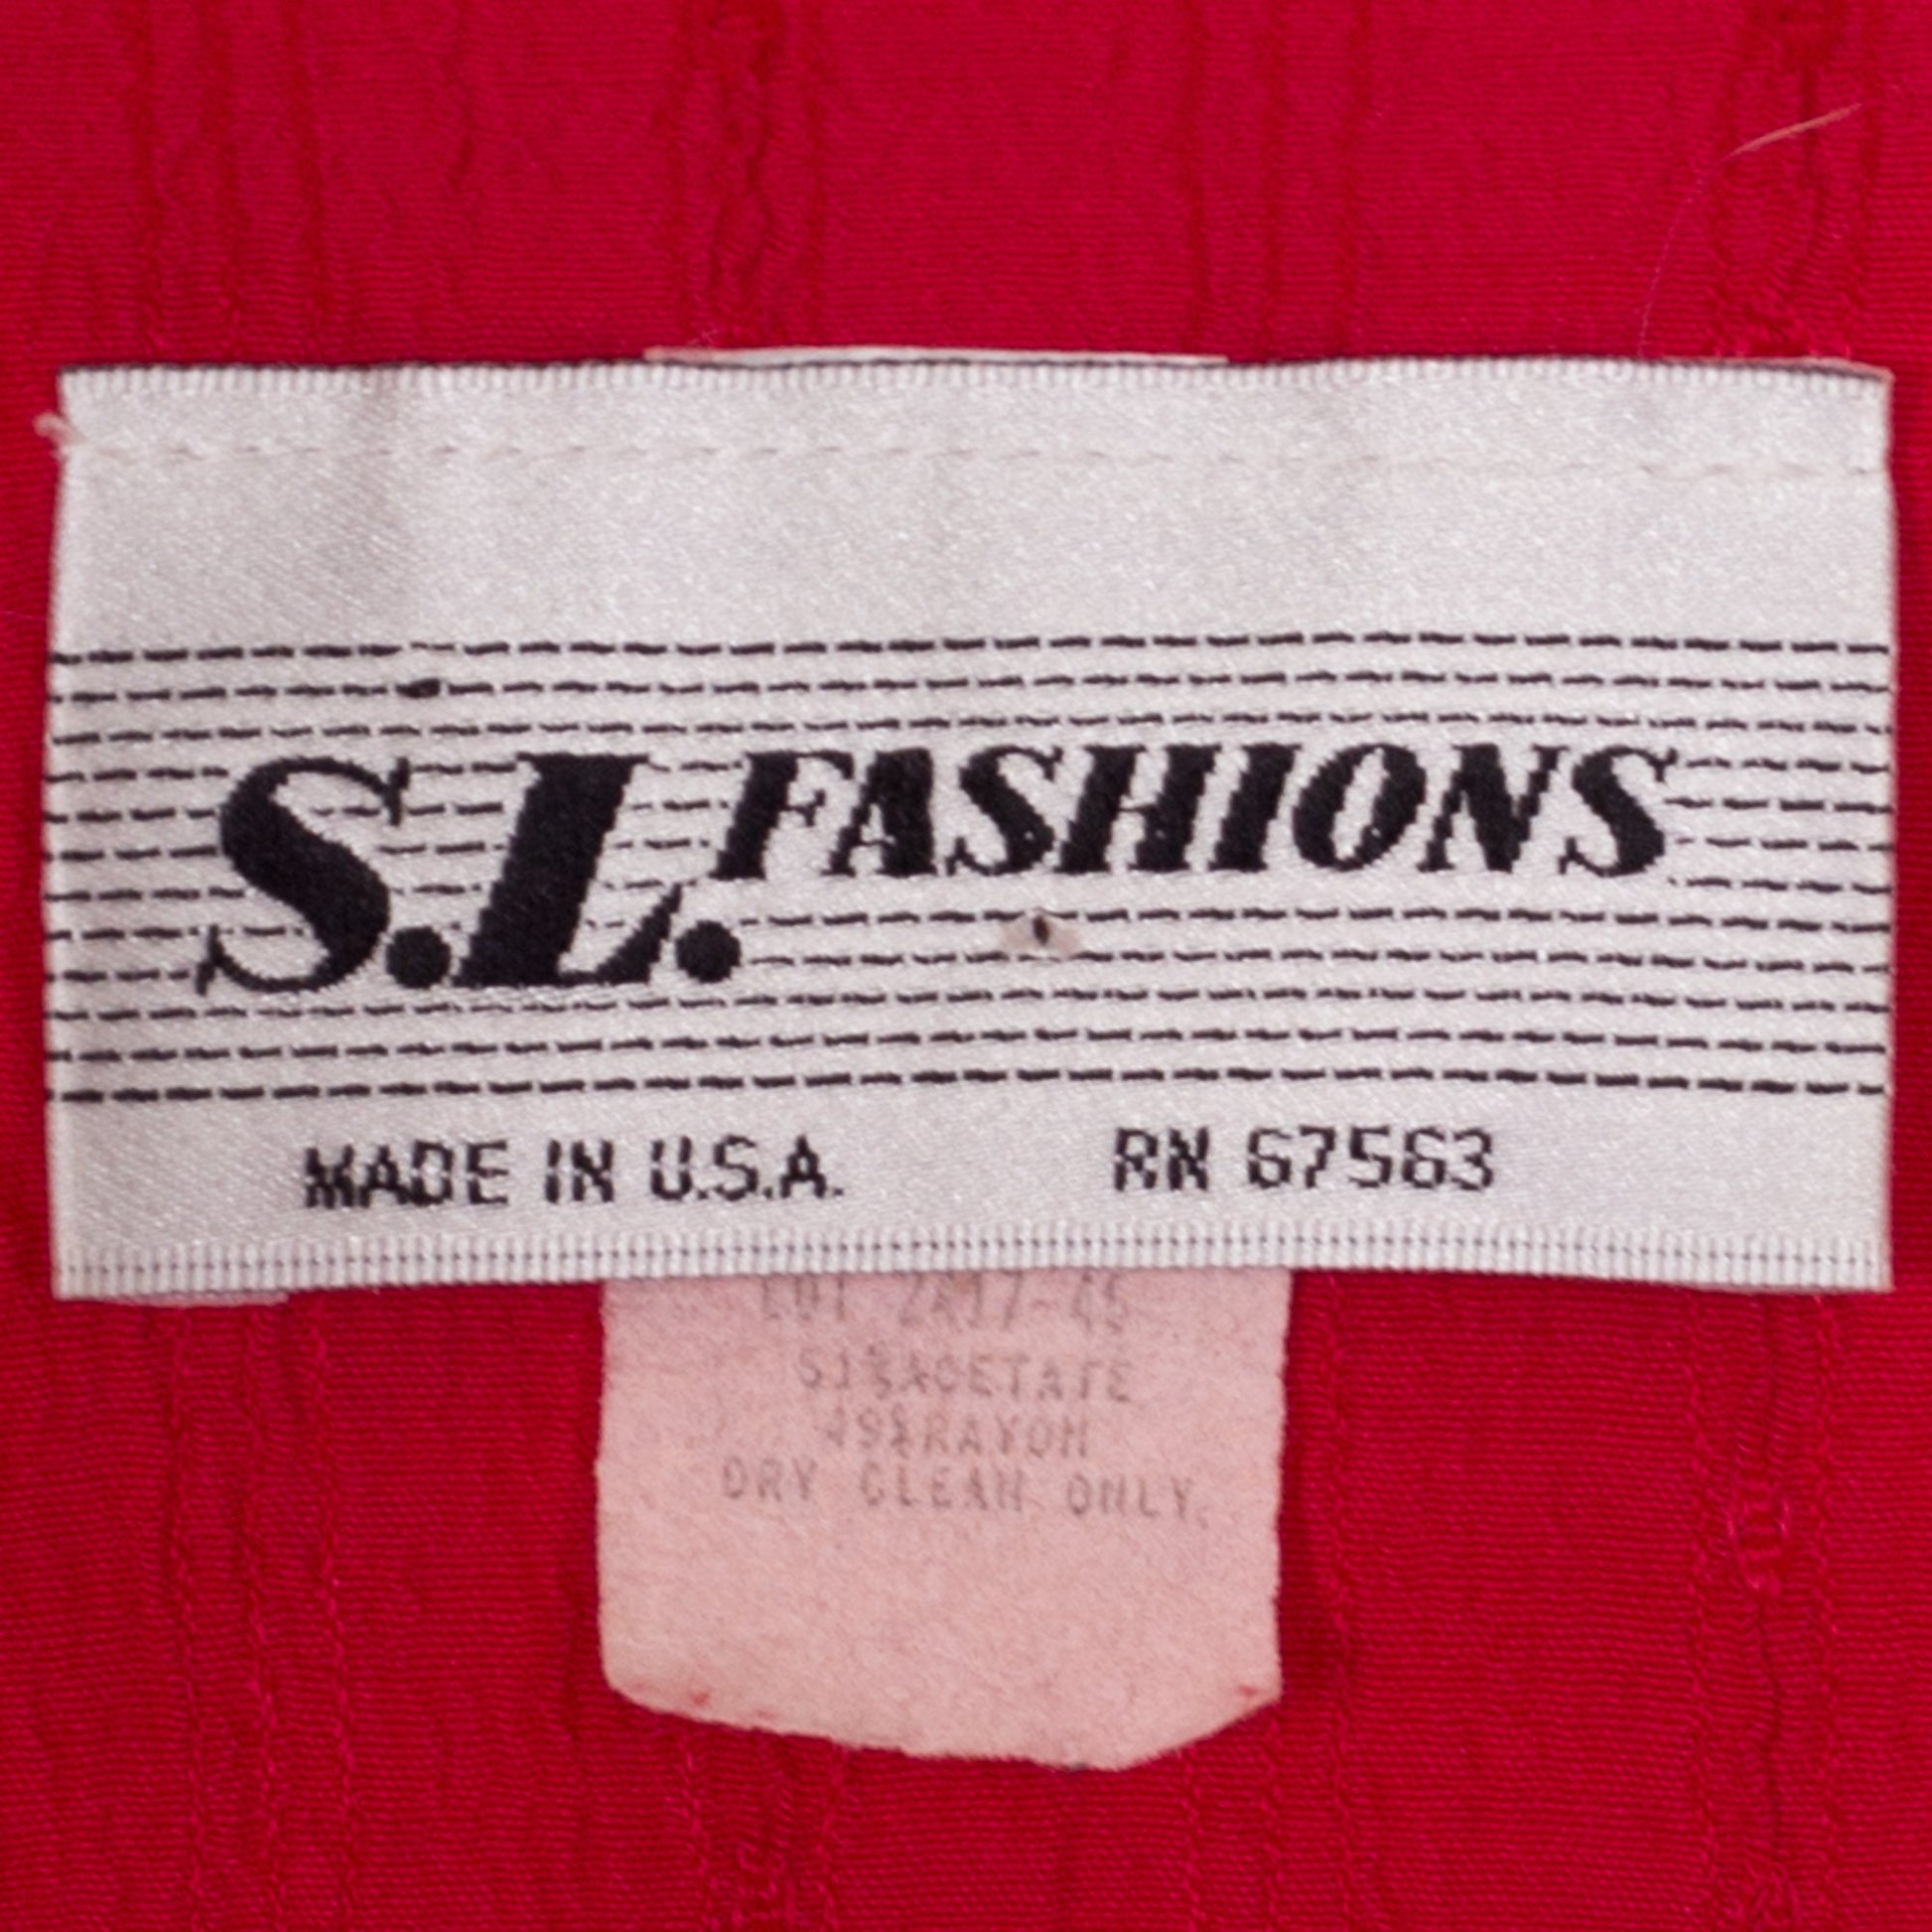 80s Red Button Up Jumpsuit - Large | Vintage Long Sleeve Grunge V-Neck Tapered Leg Pantsuit